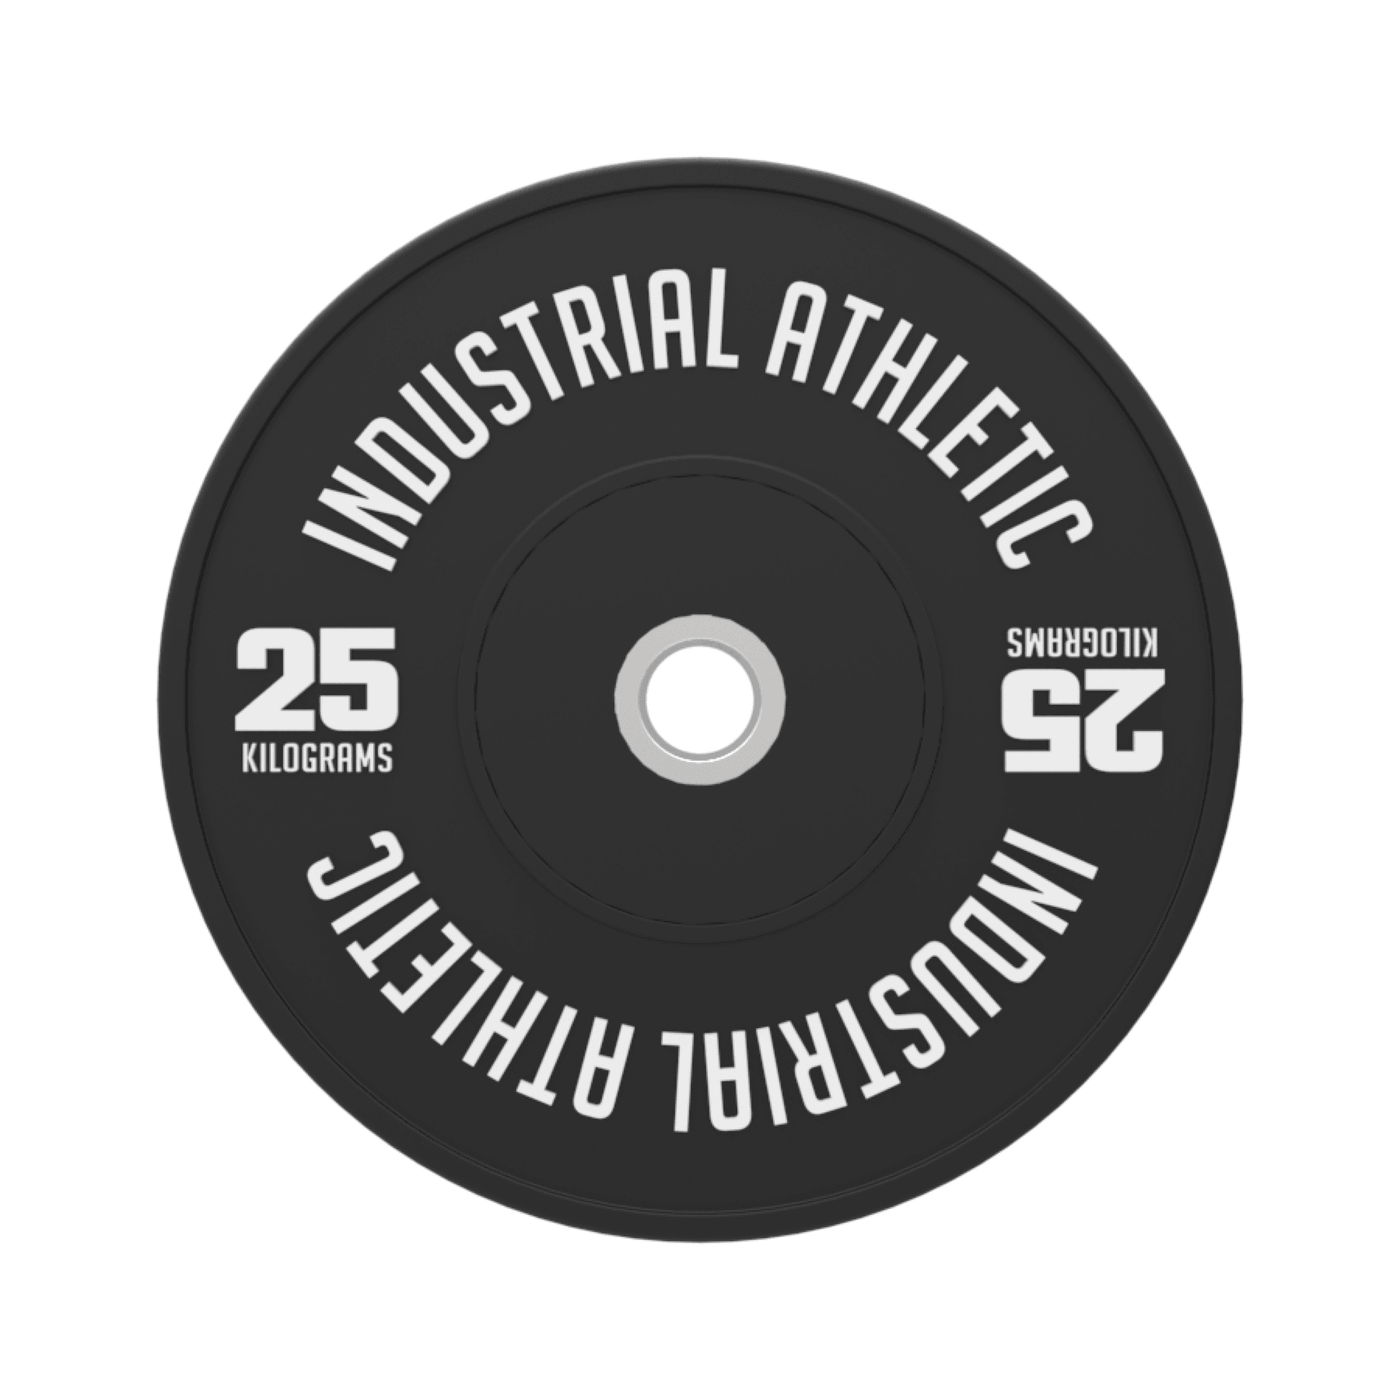 25kg HD Bumper Plates - Pair - Industrial Athletic